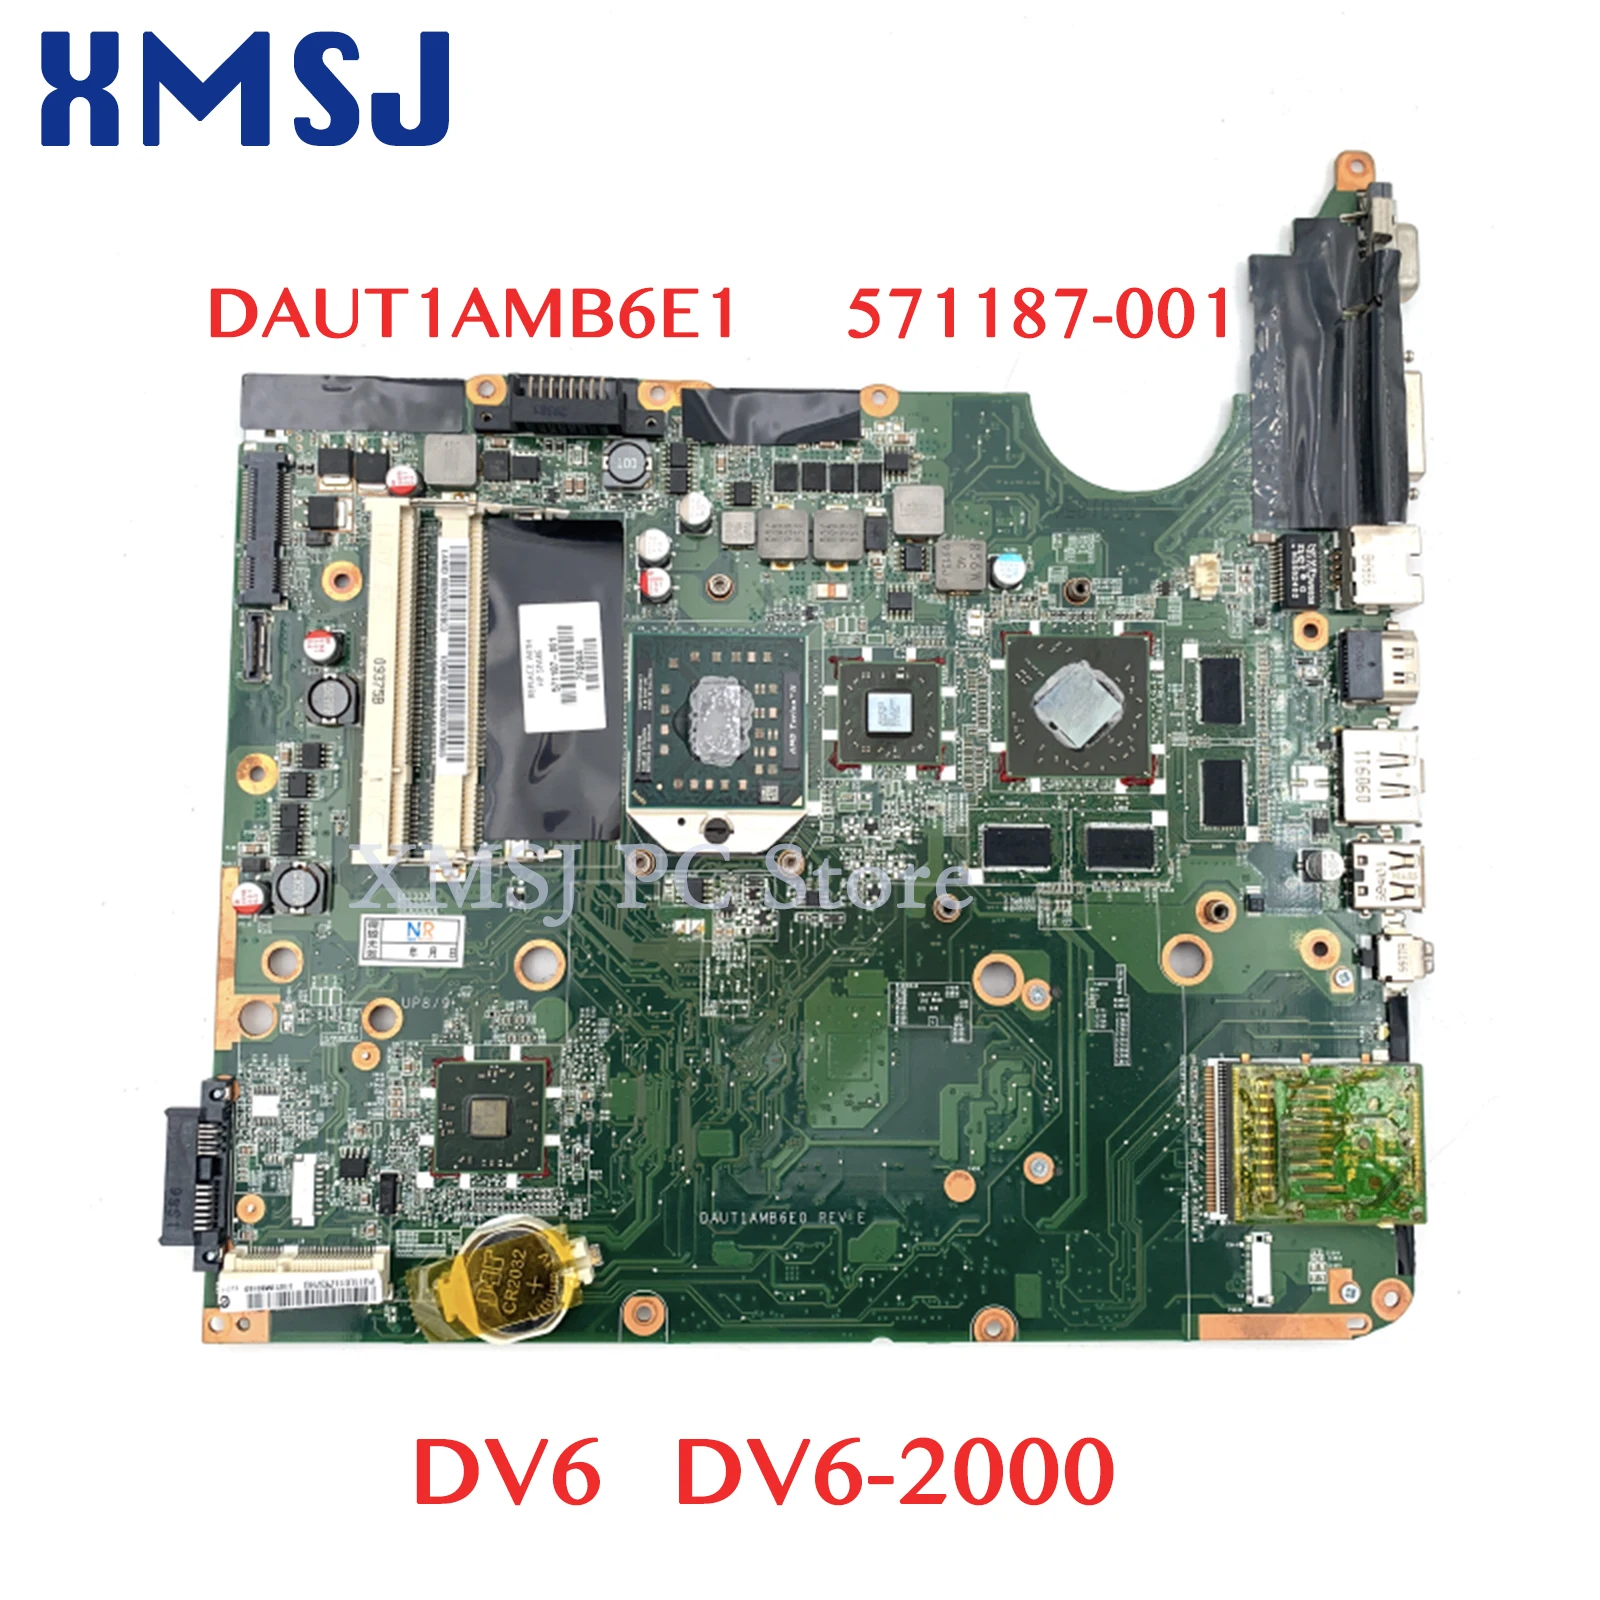 

XMSJ For HP Pavilion DV6 DV6-2000 571187-001 DAUT1AMB6E1 Motherboard Main BoardHD 4650 1GB Free CPU Fully Tested